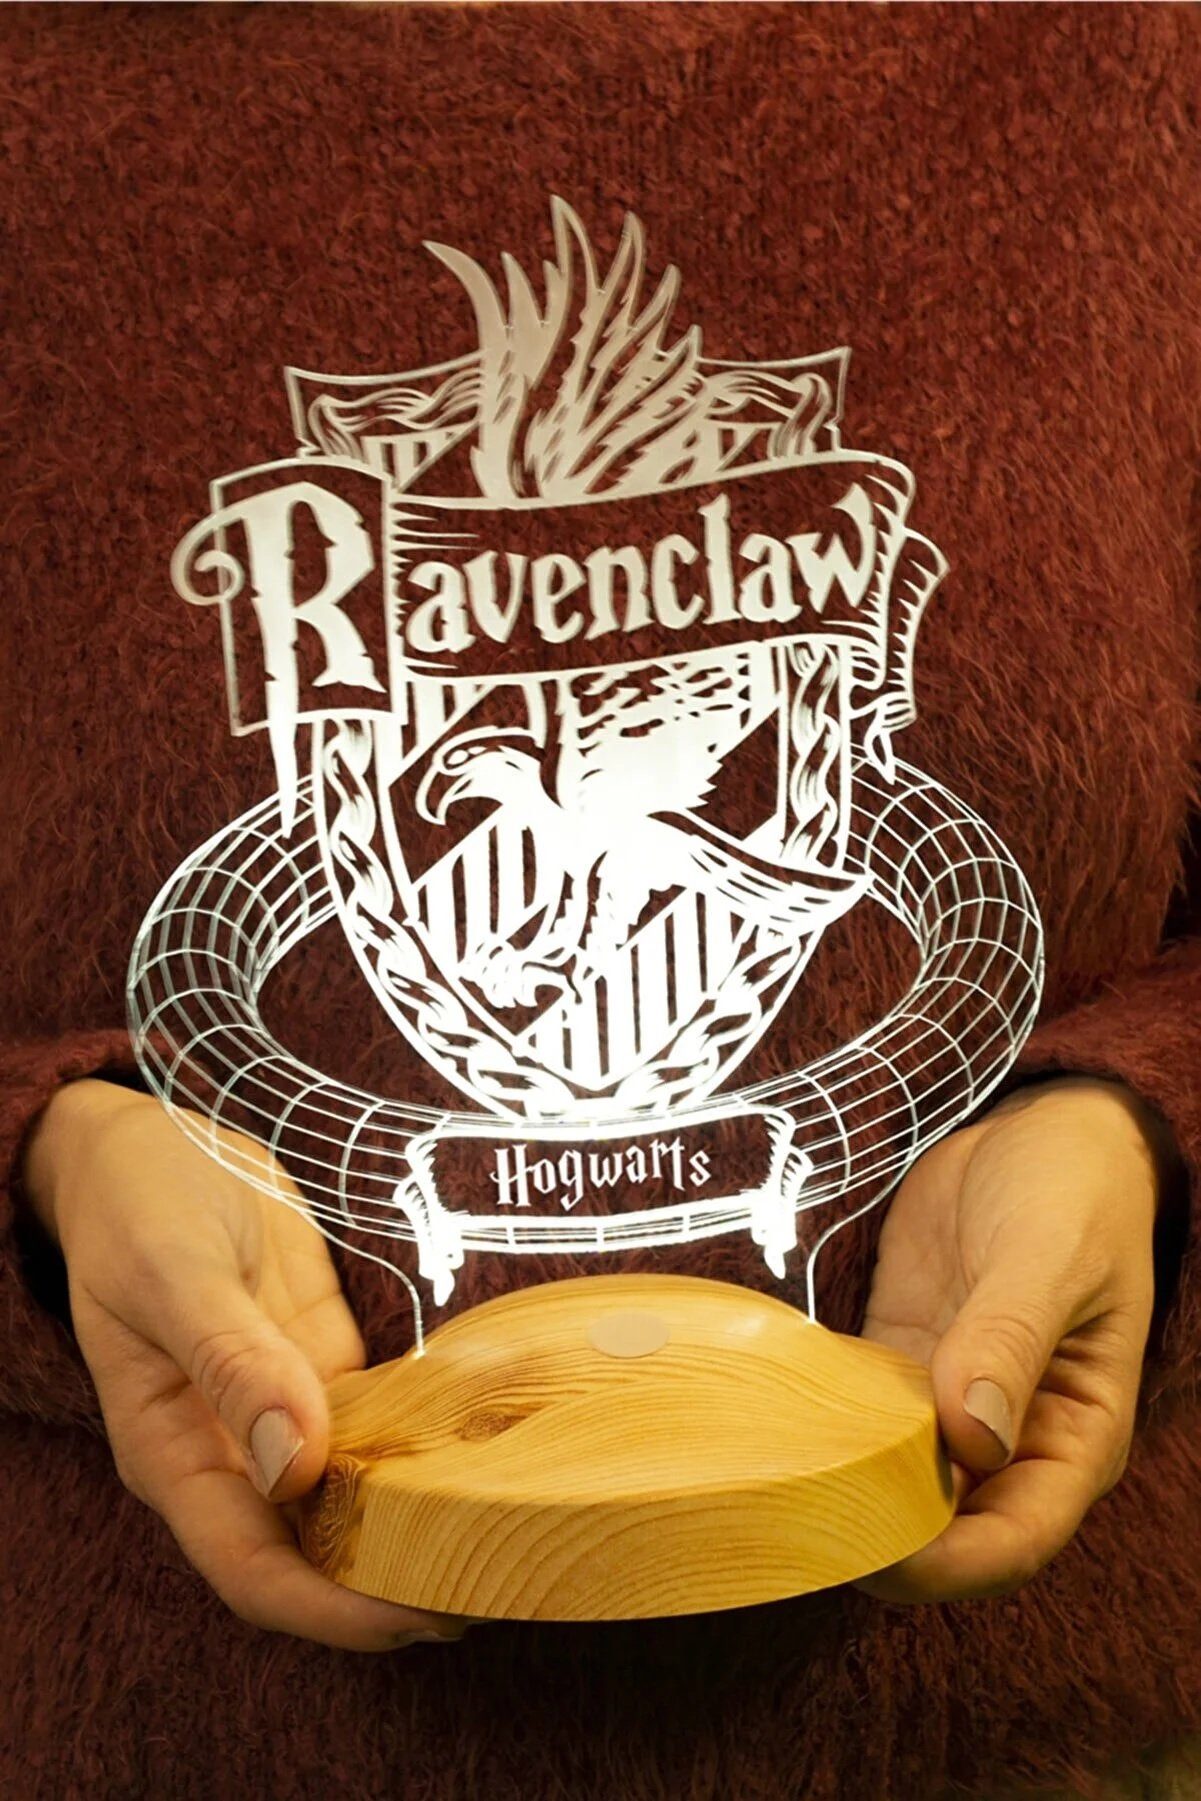 Hogwarts LED Ravenclaw integriert, LED-Nachtlicht 6 Geschenkelampe Harry Potter Geschenke Lampe, Nachttischlampe fest LED Farben